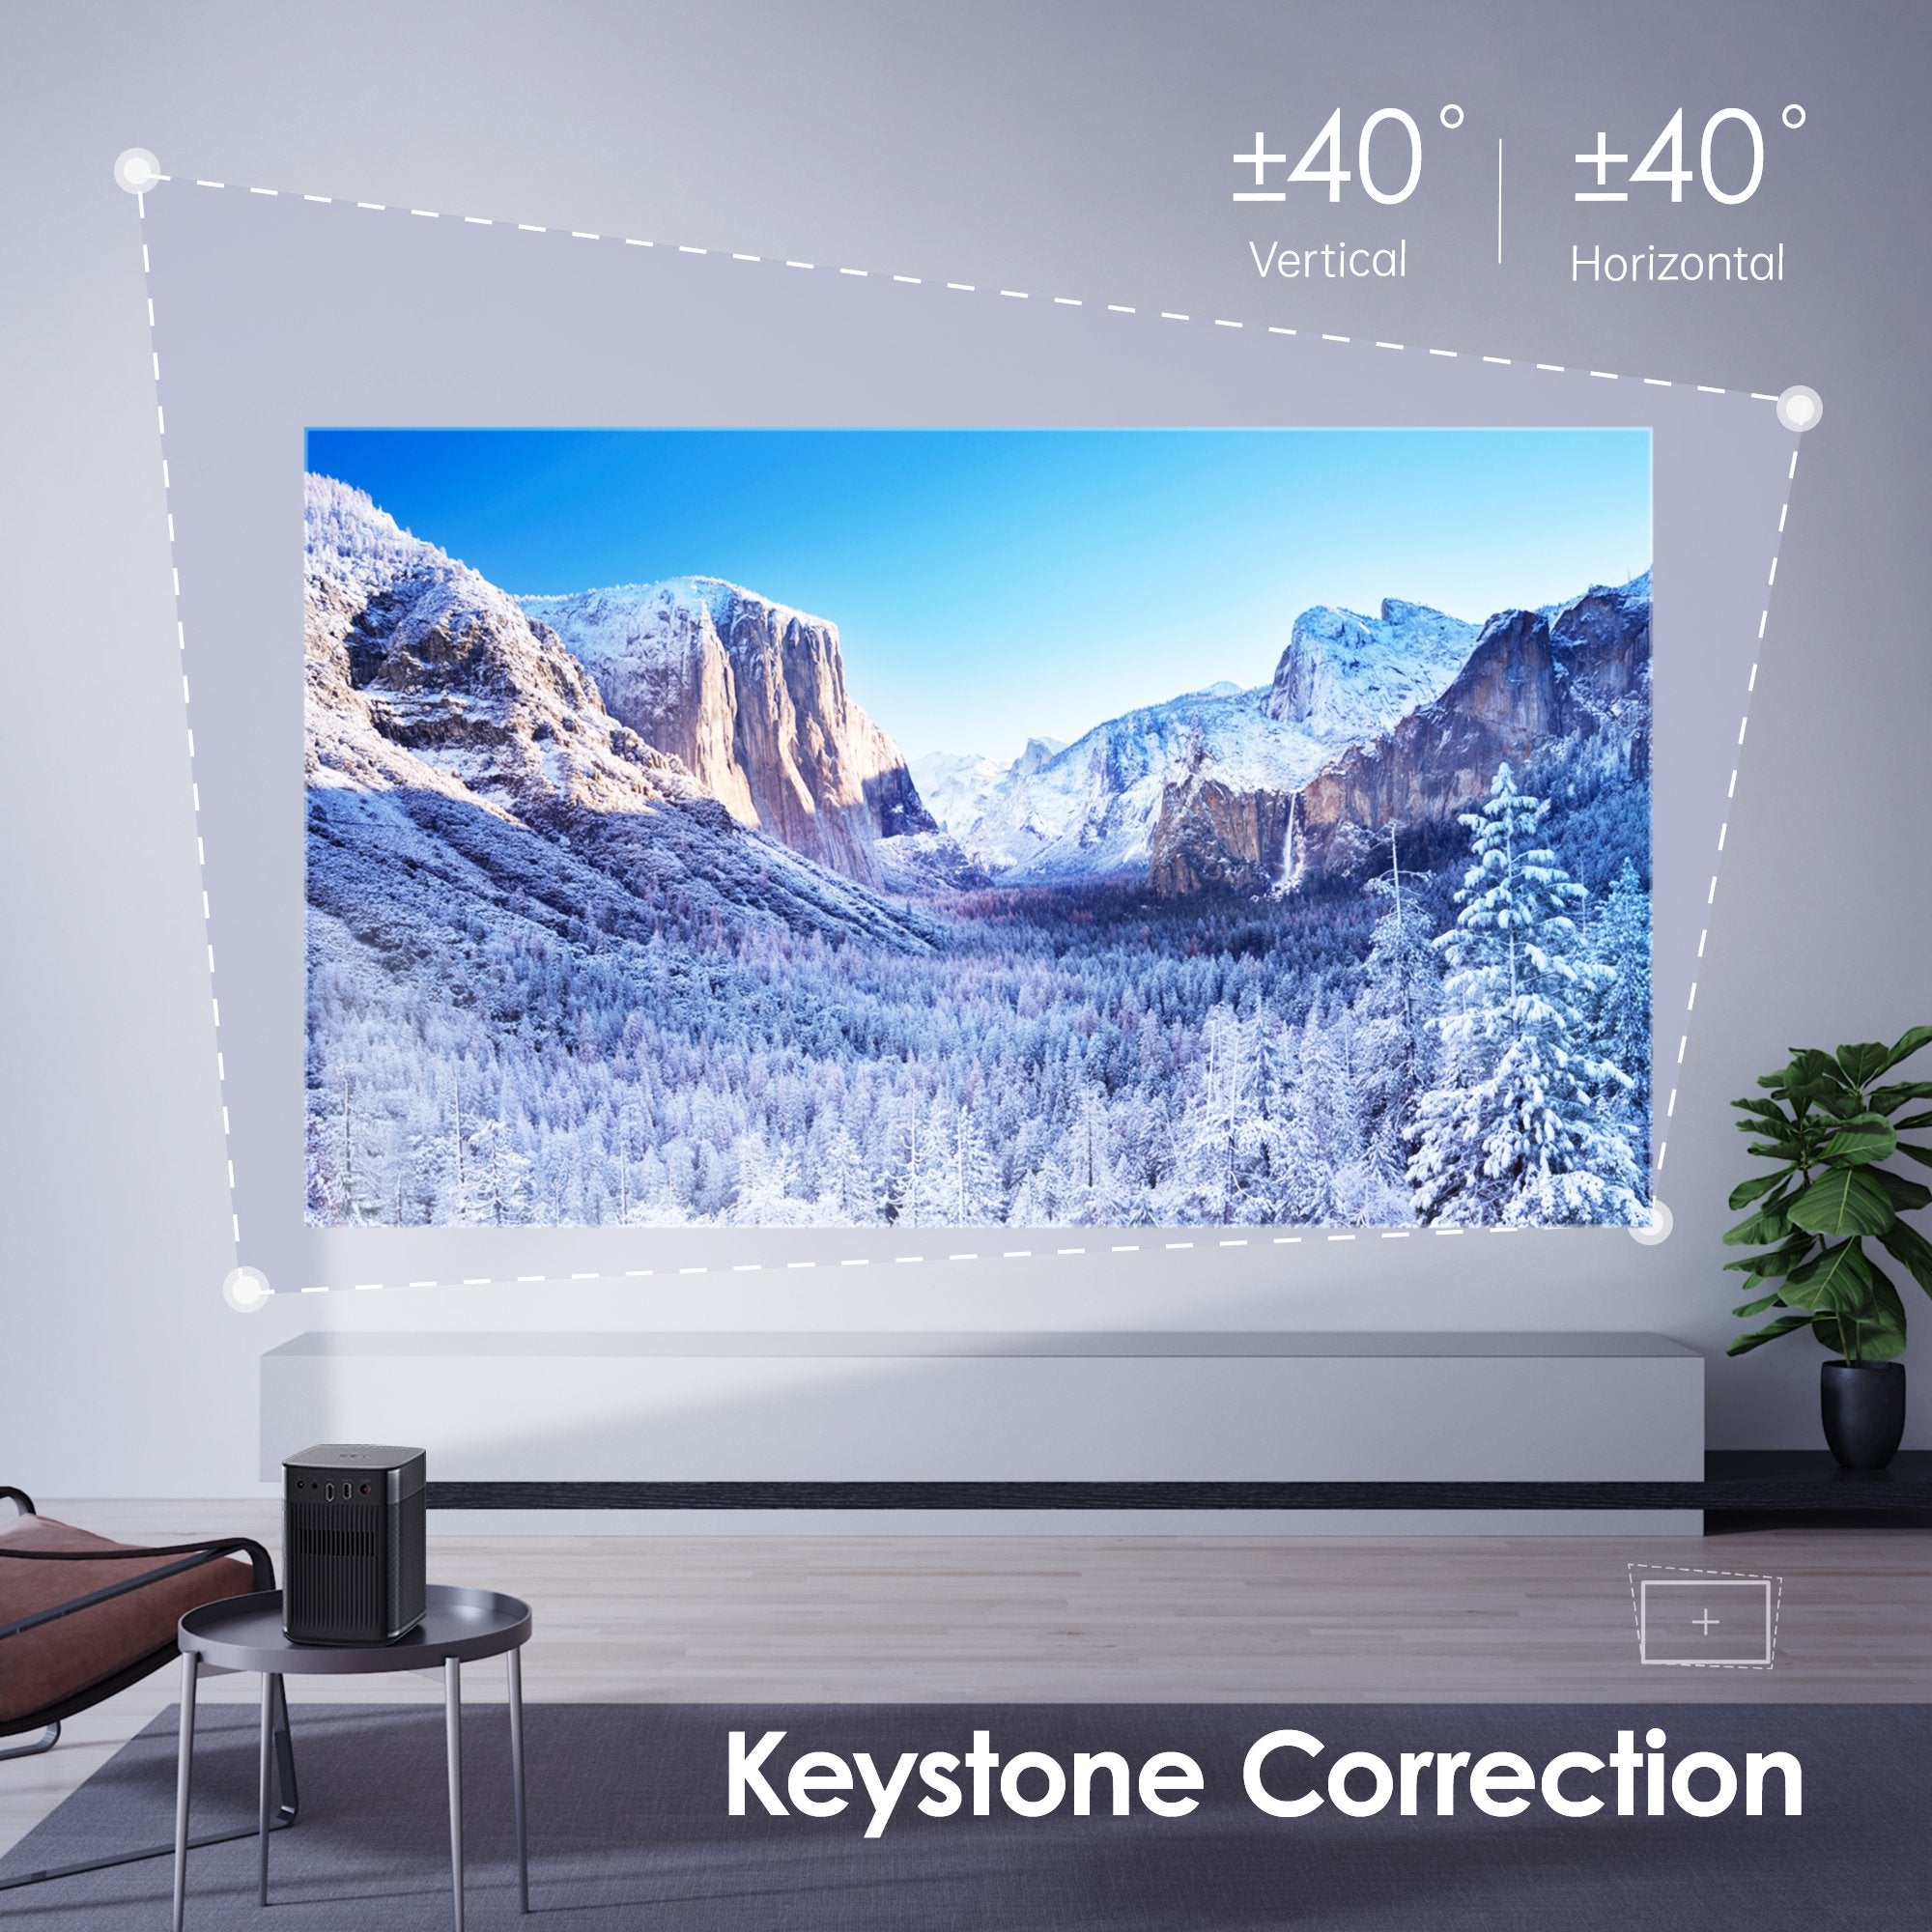 Halo - Smart Portable Projector - Keystone Correction